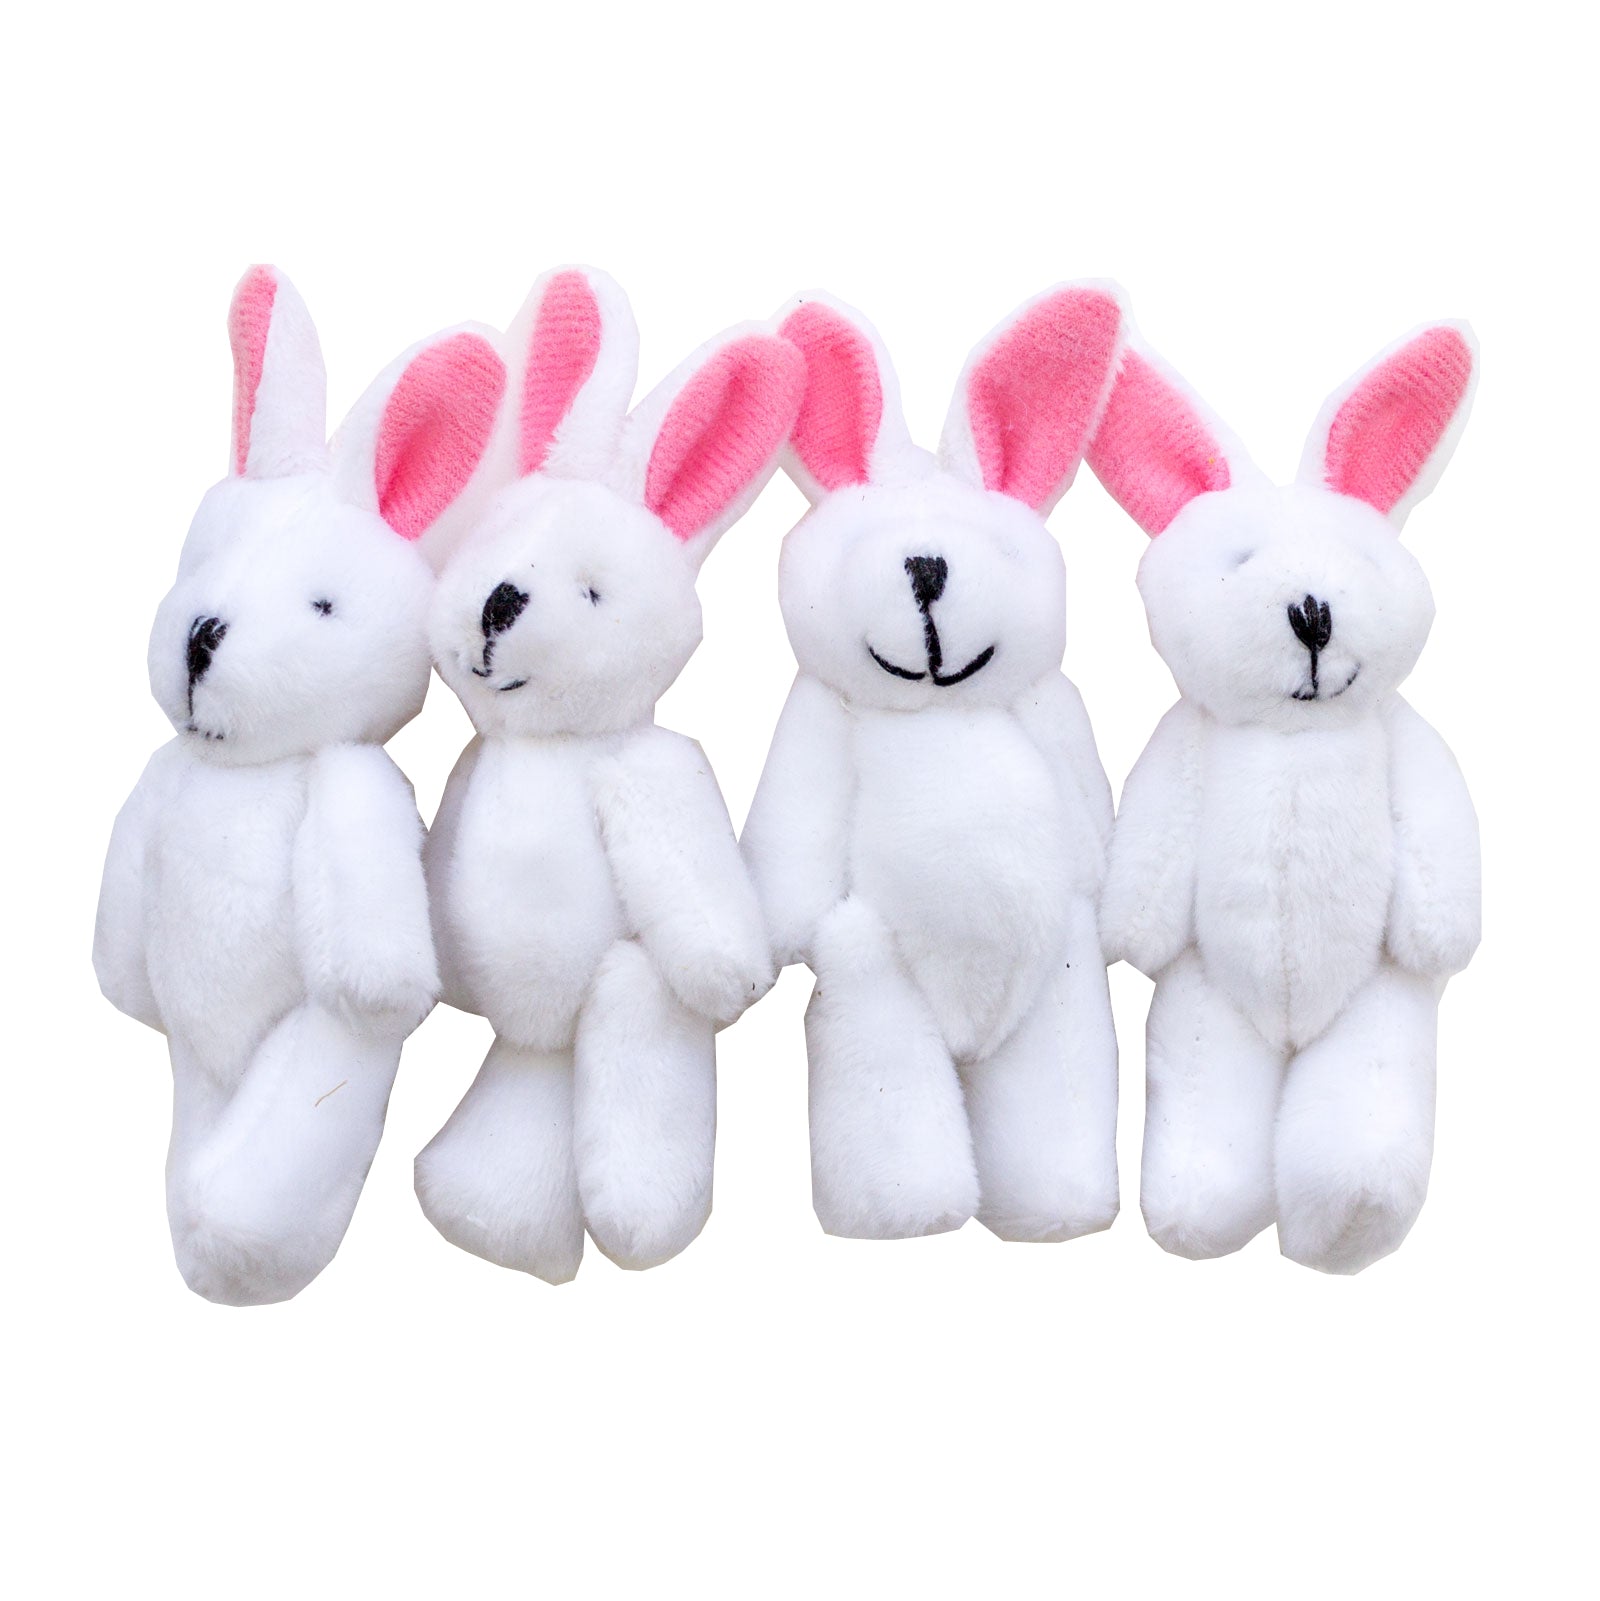 Small Rabbits X 30 - Cute Soft Adorable